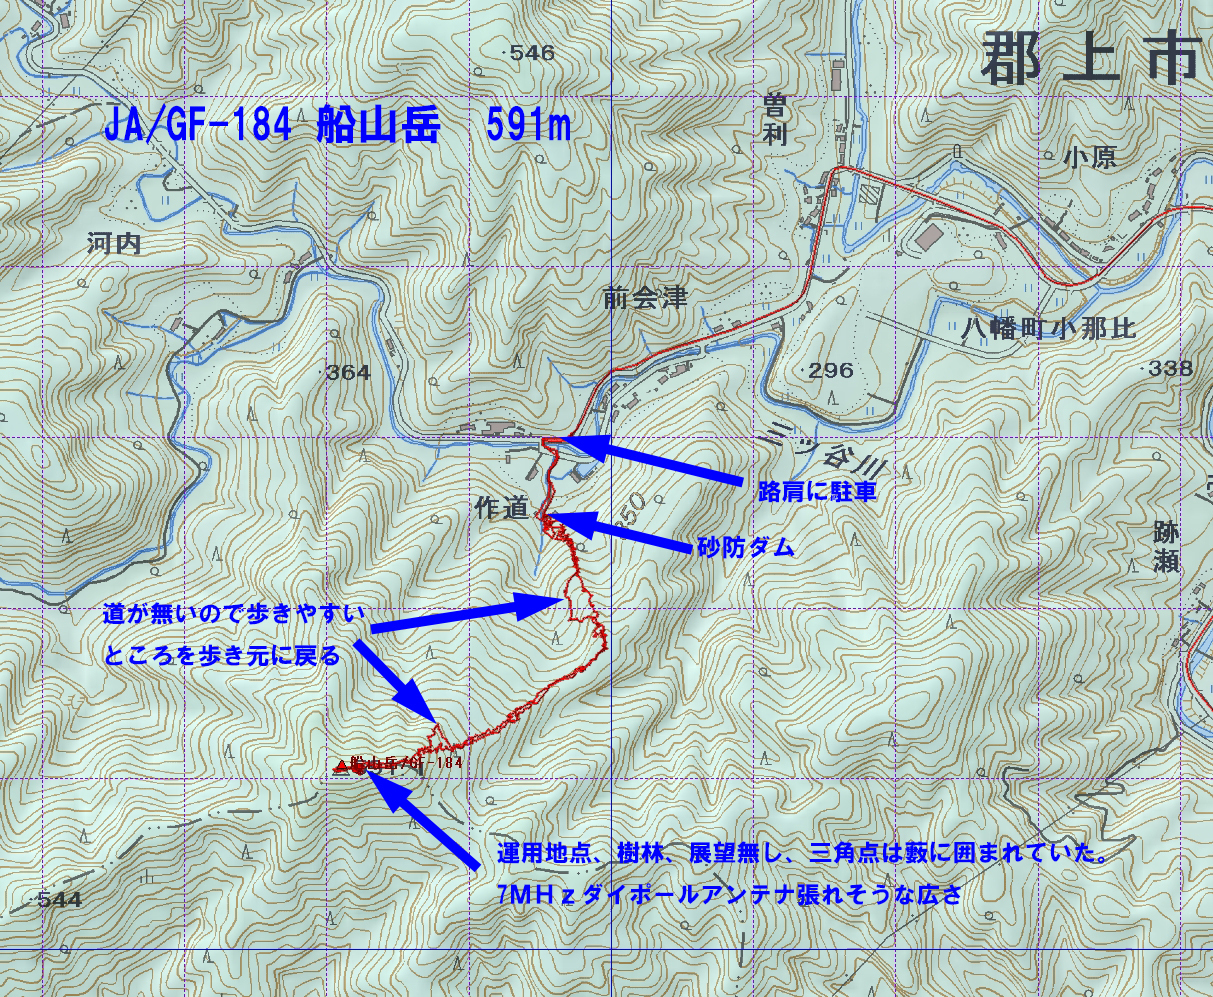 舟山岳」591m (岐阜県) SOTA JA/GF-184 | SOTA(Summits On The Air)山歩き